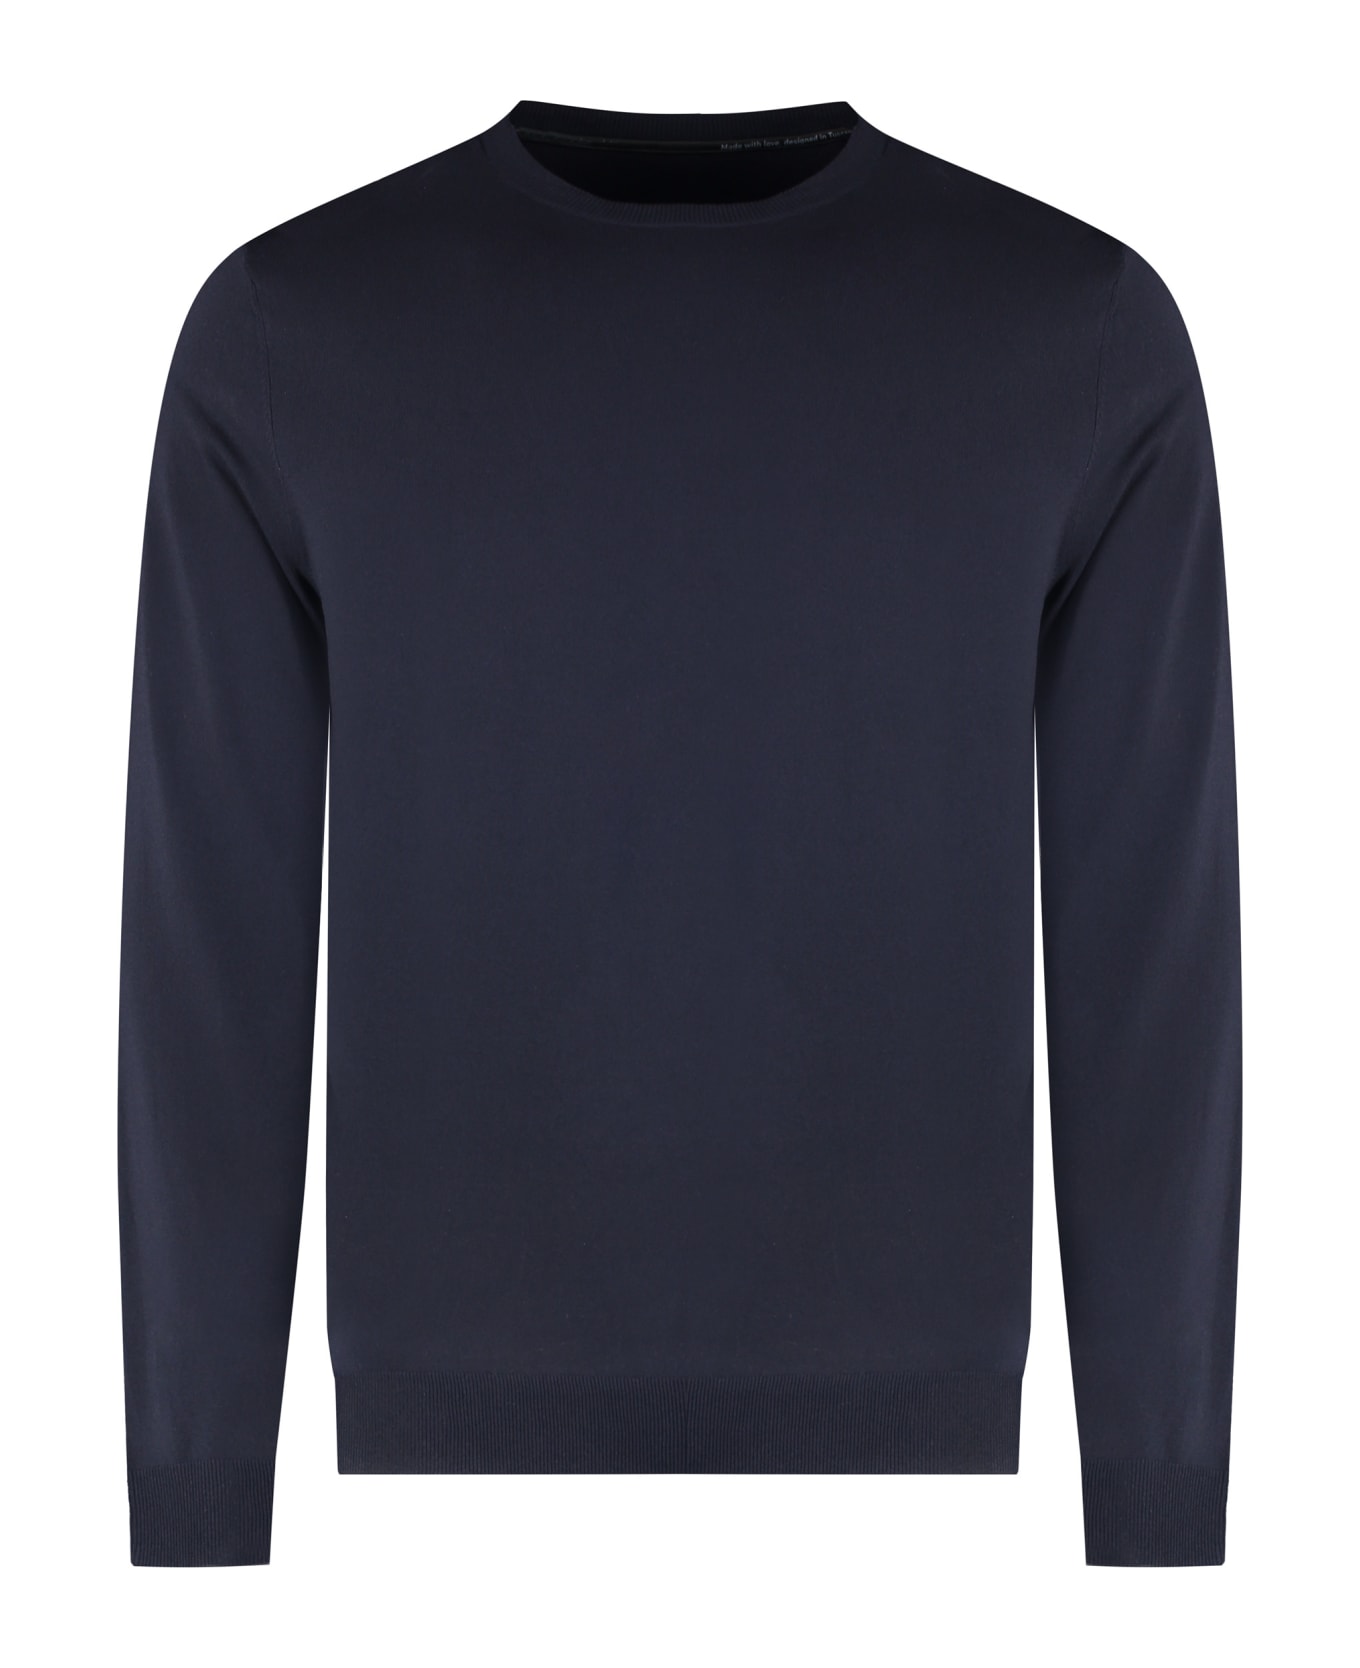 RRD - Roberto Ricci Design Booster Round Long Sleeve Crew-neck Sweater - Blue Black